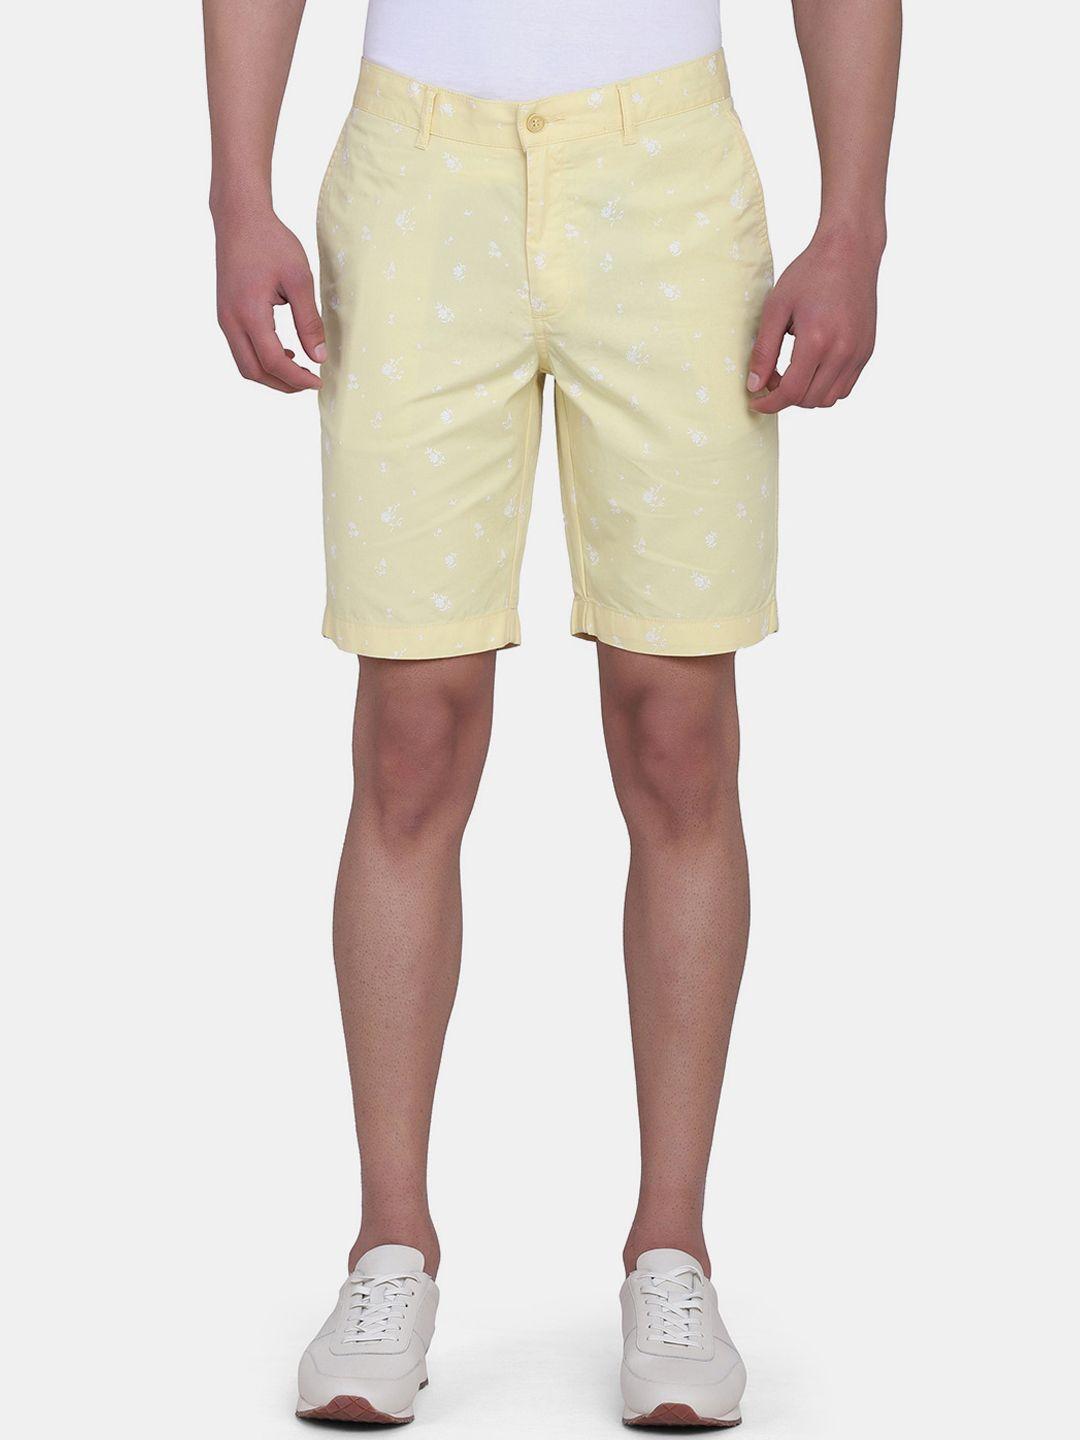 Blackberrys Men Yellow & White Printed Bs-10 Slim Fit Low-Rise Shorts